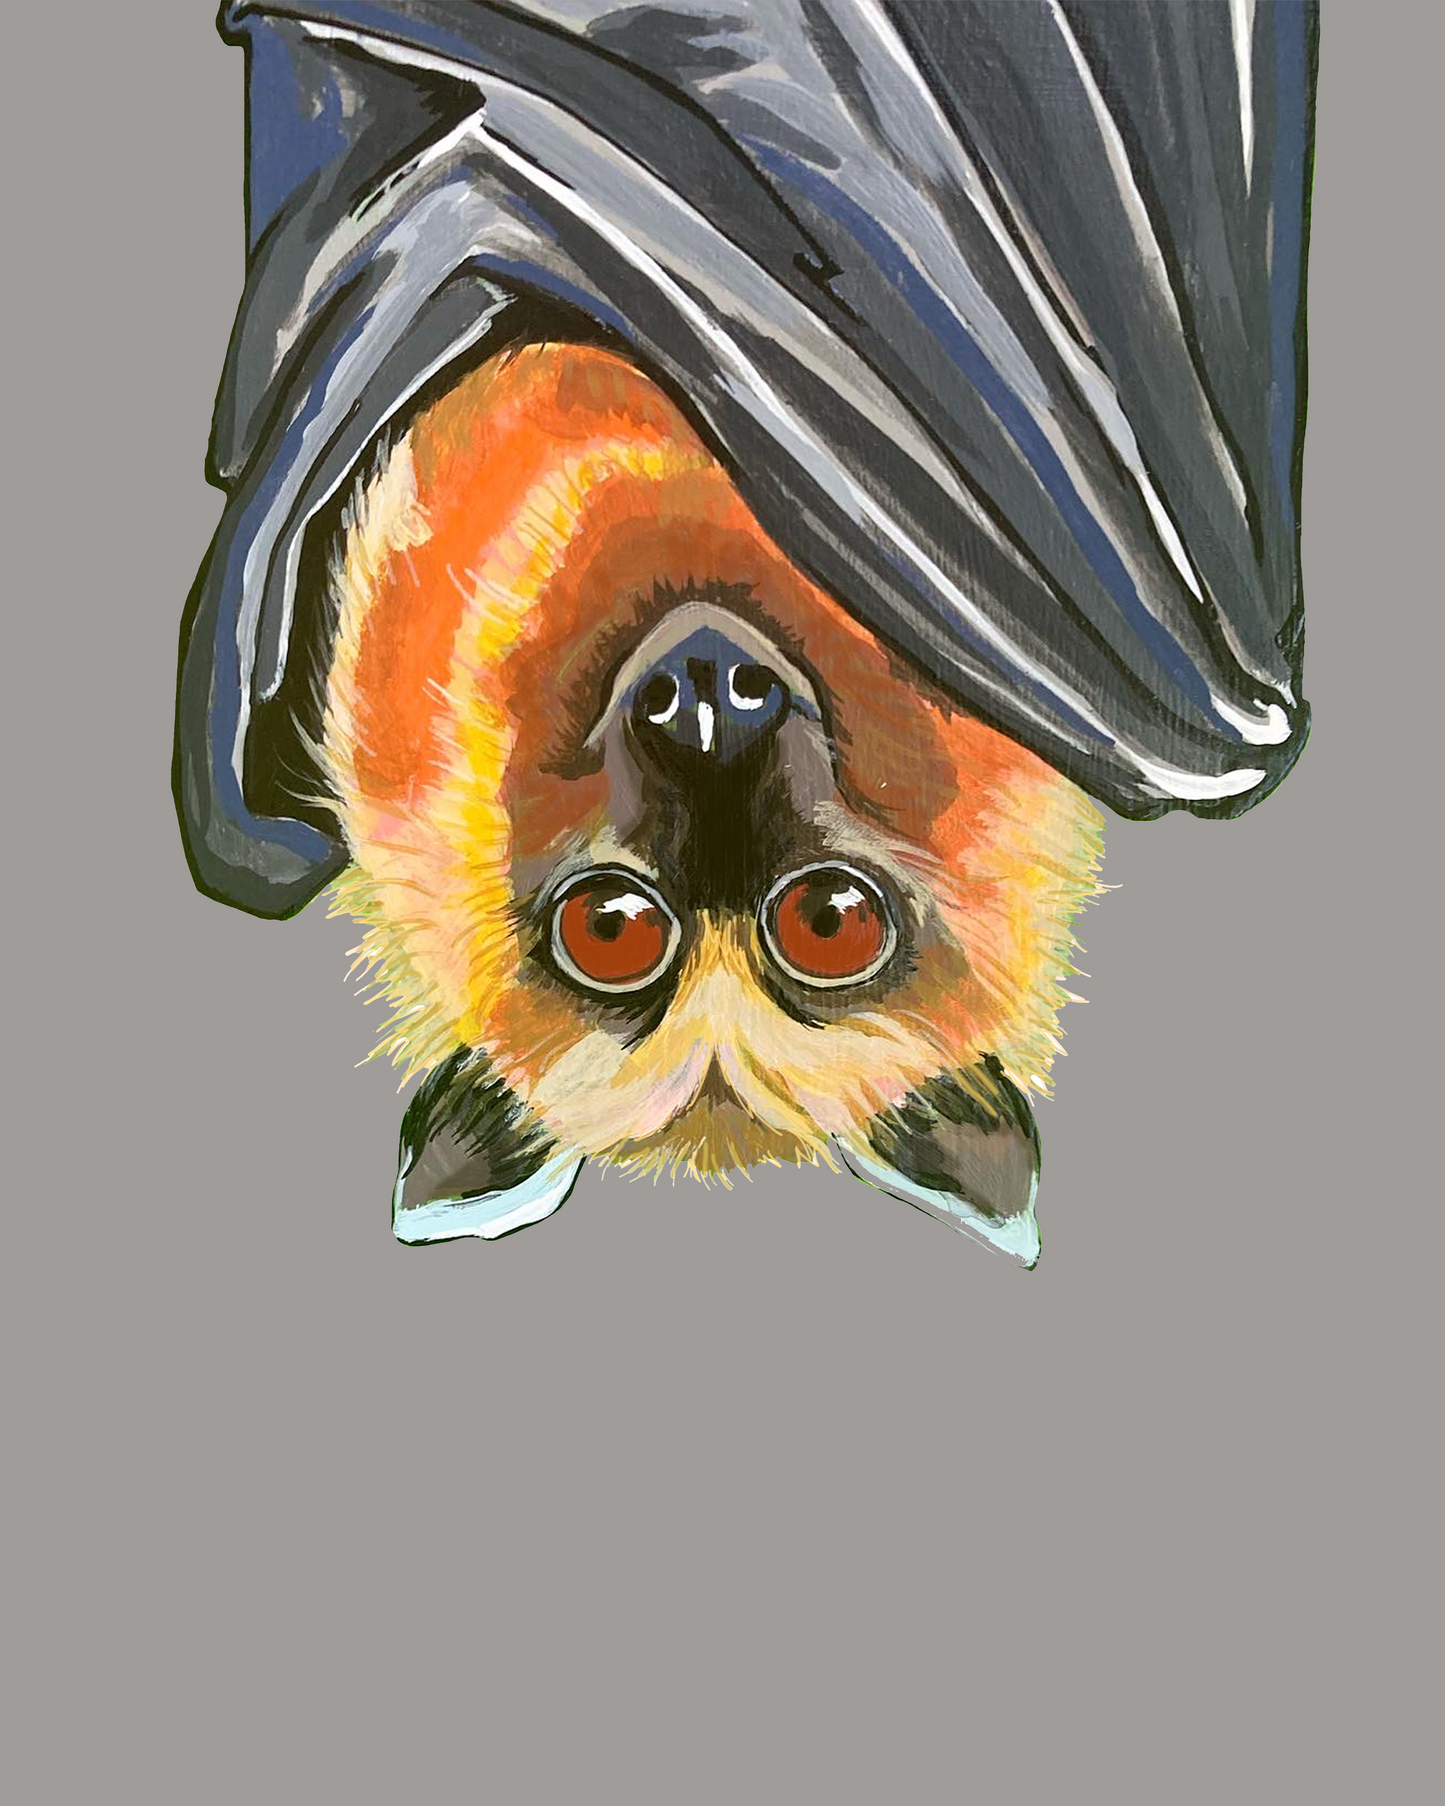 Barnabee the Bat